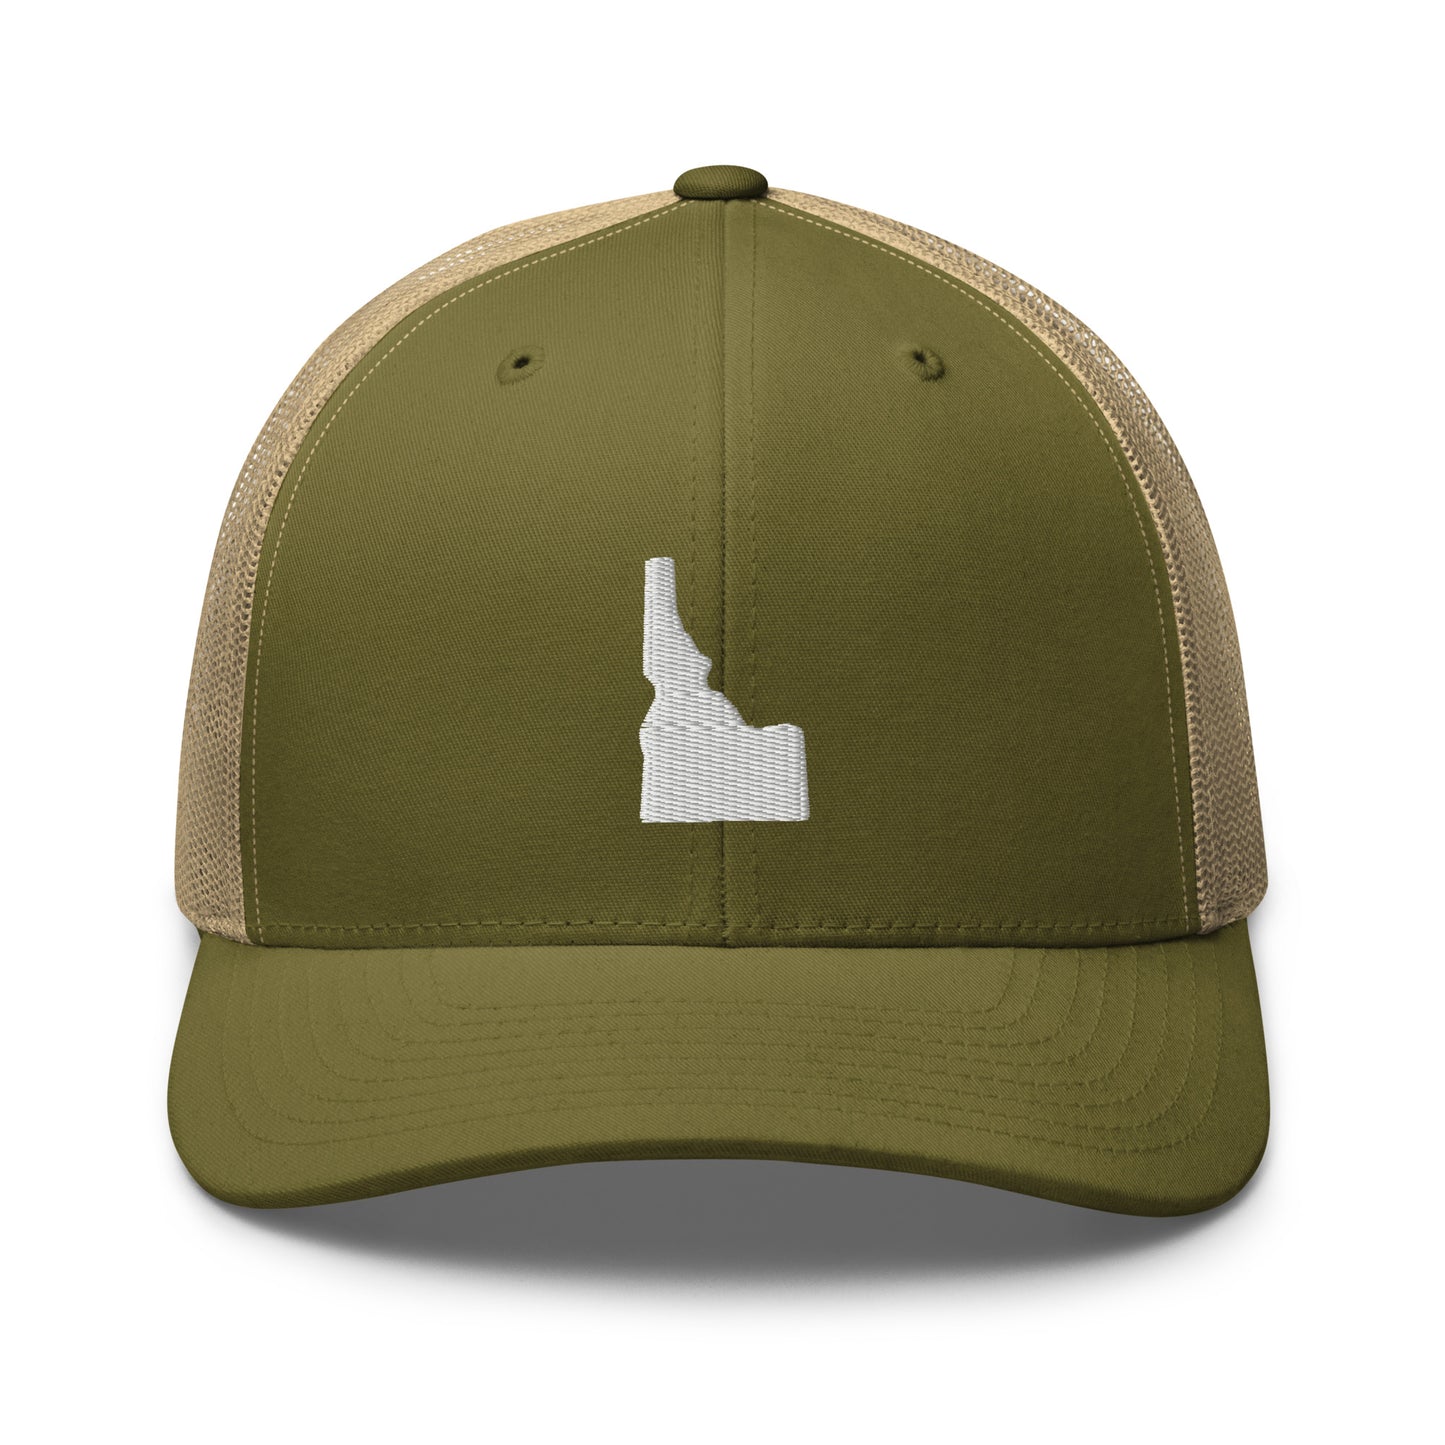 Idaho State Silhouette Mid 6 Panel Snapback Trucker Hat